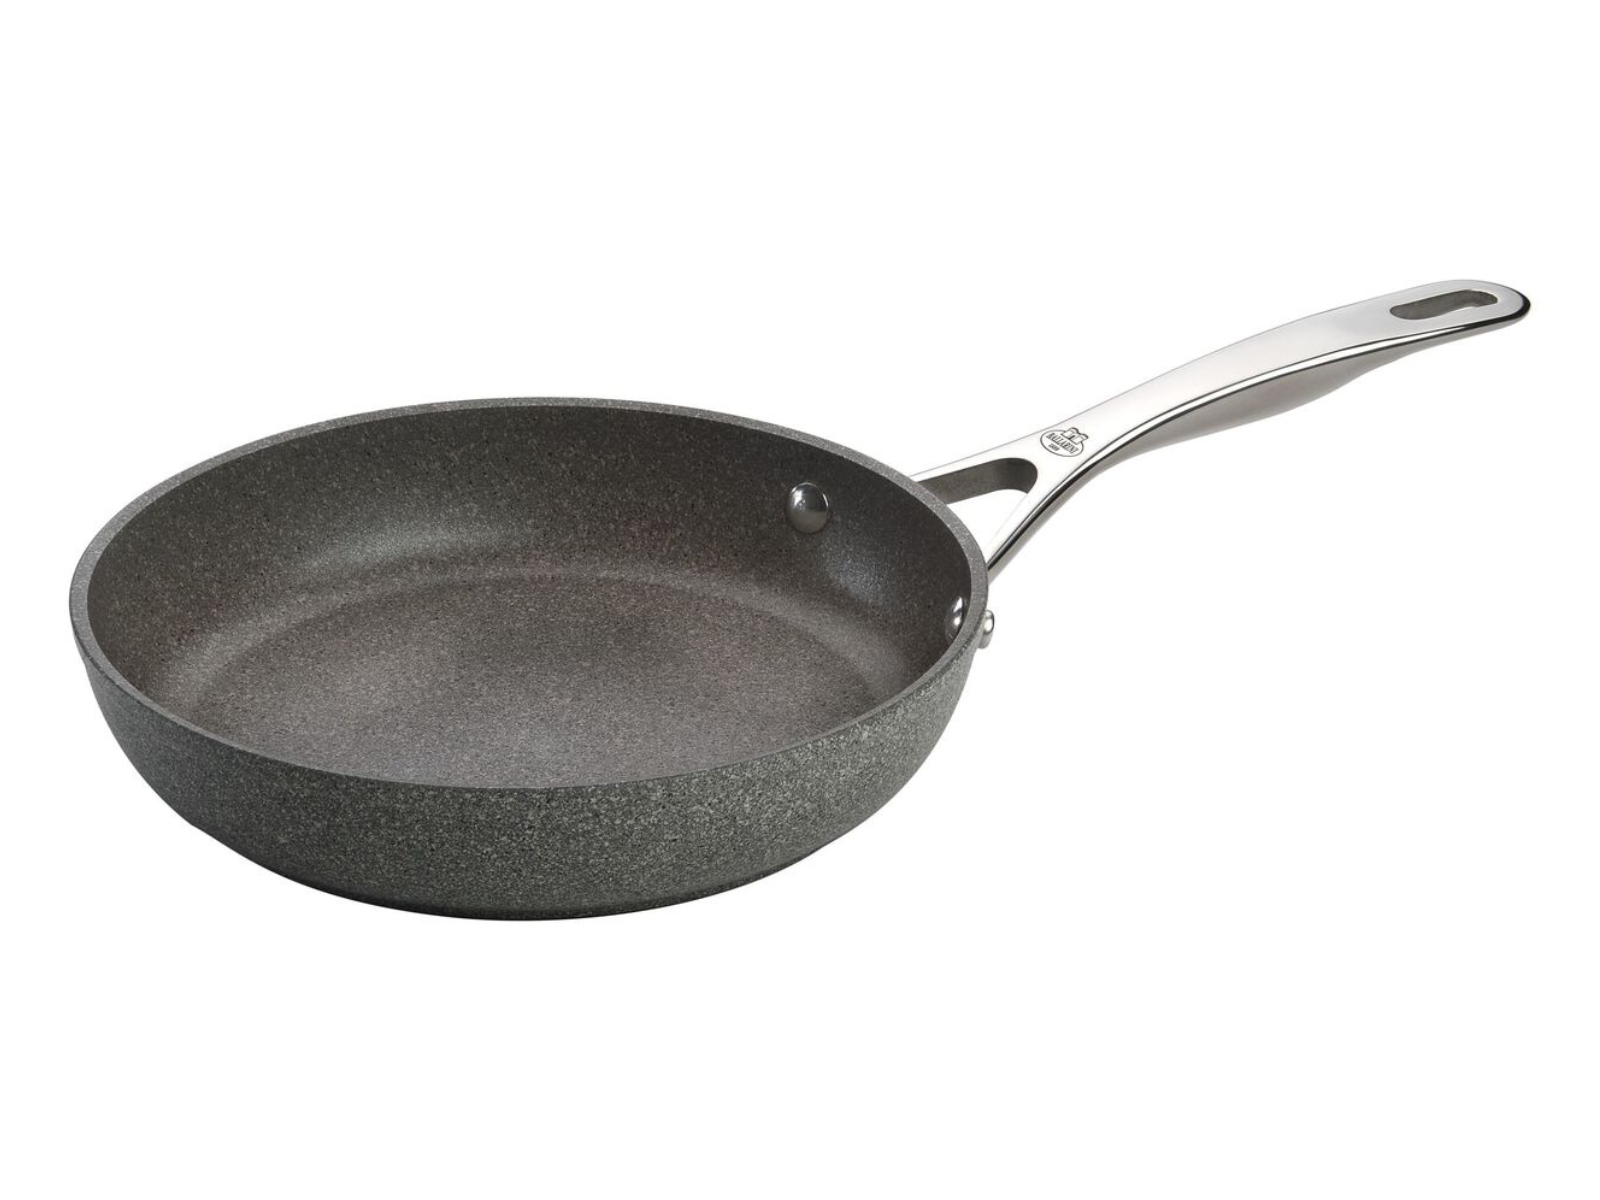  BALLARINI Palermo Frying Pan, 32 cm, Stainless Steel, Grey:  Home & Kitchen